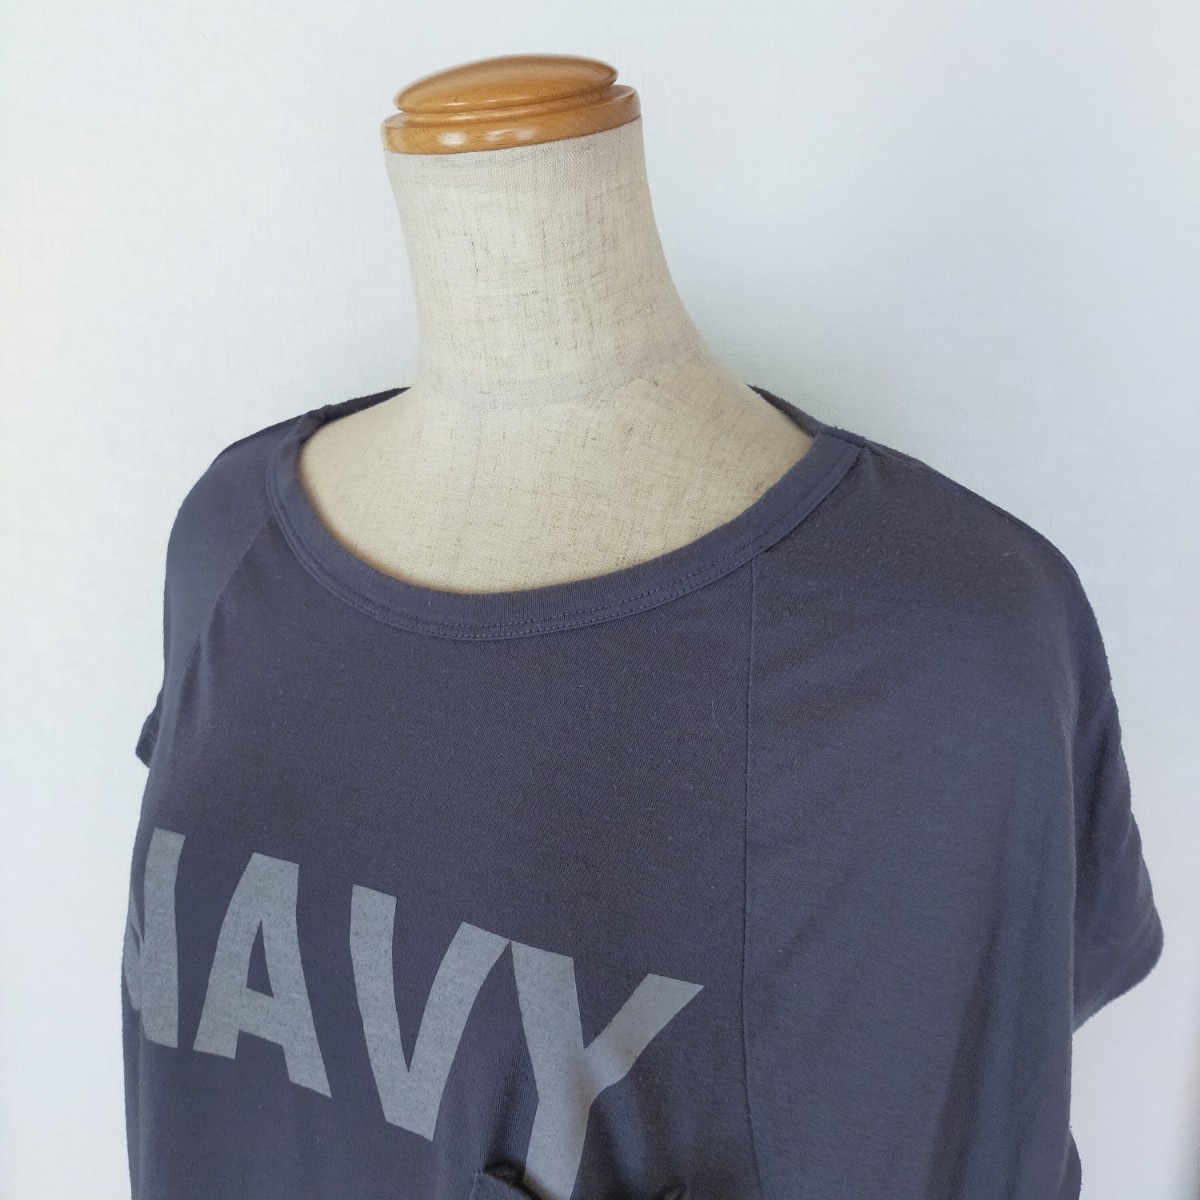 *BEAMS HEART Logo T-shirt short sleeves T-shirt NAVY gray navy 